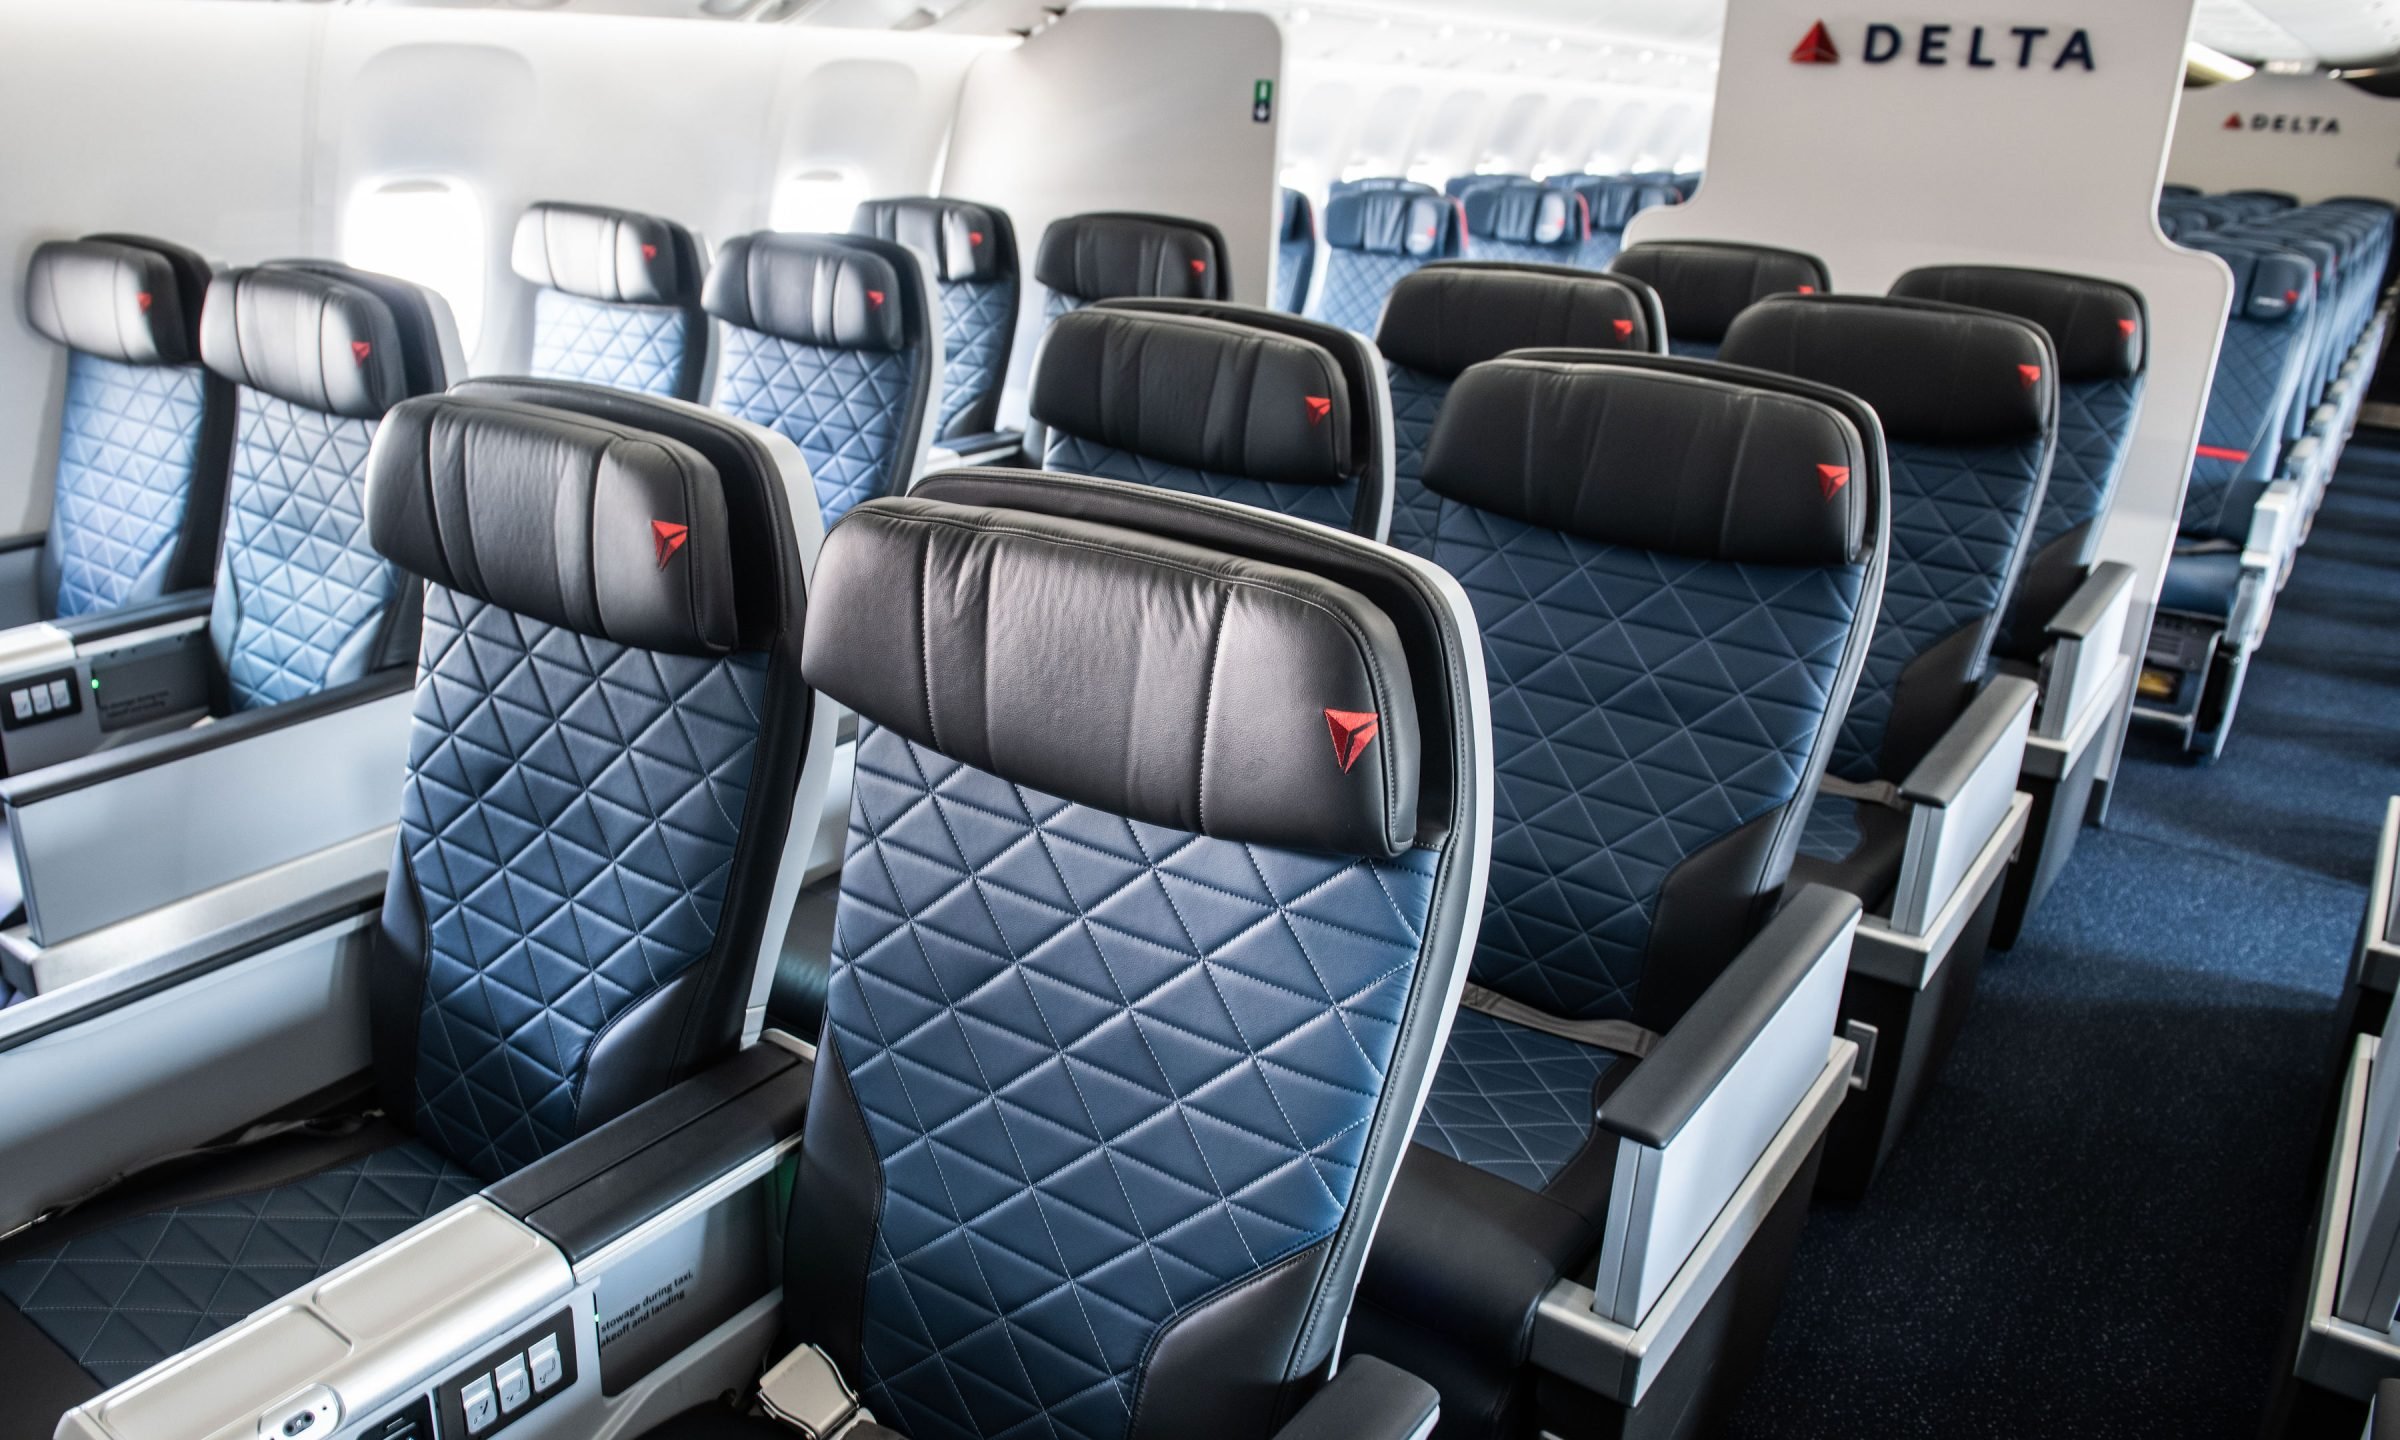 Baggage FAQs  Delta Air Lines